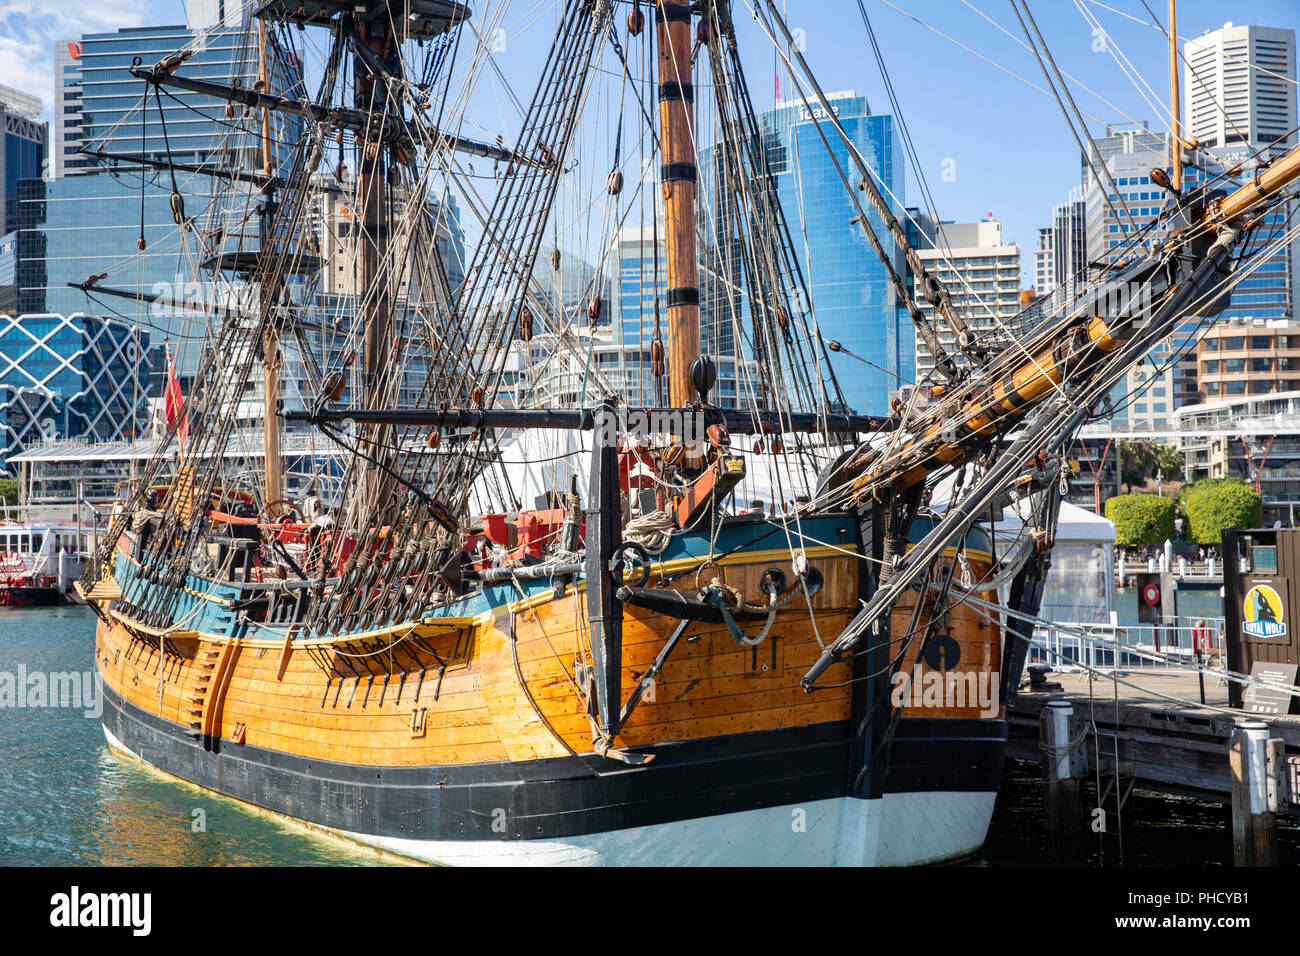 Replik von James Cook Schiff HMS Bark Endeavour an der Australian National Maritime Museum in Darling Harbour, Sydney, Australien Stockfoto